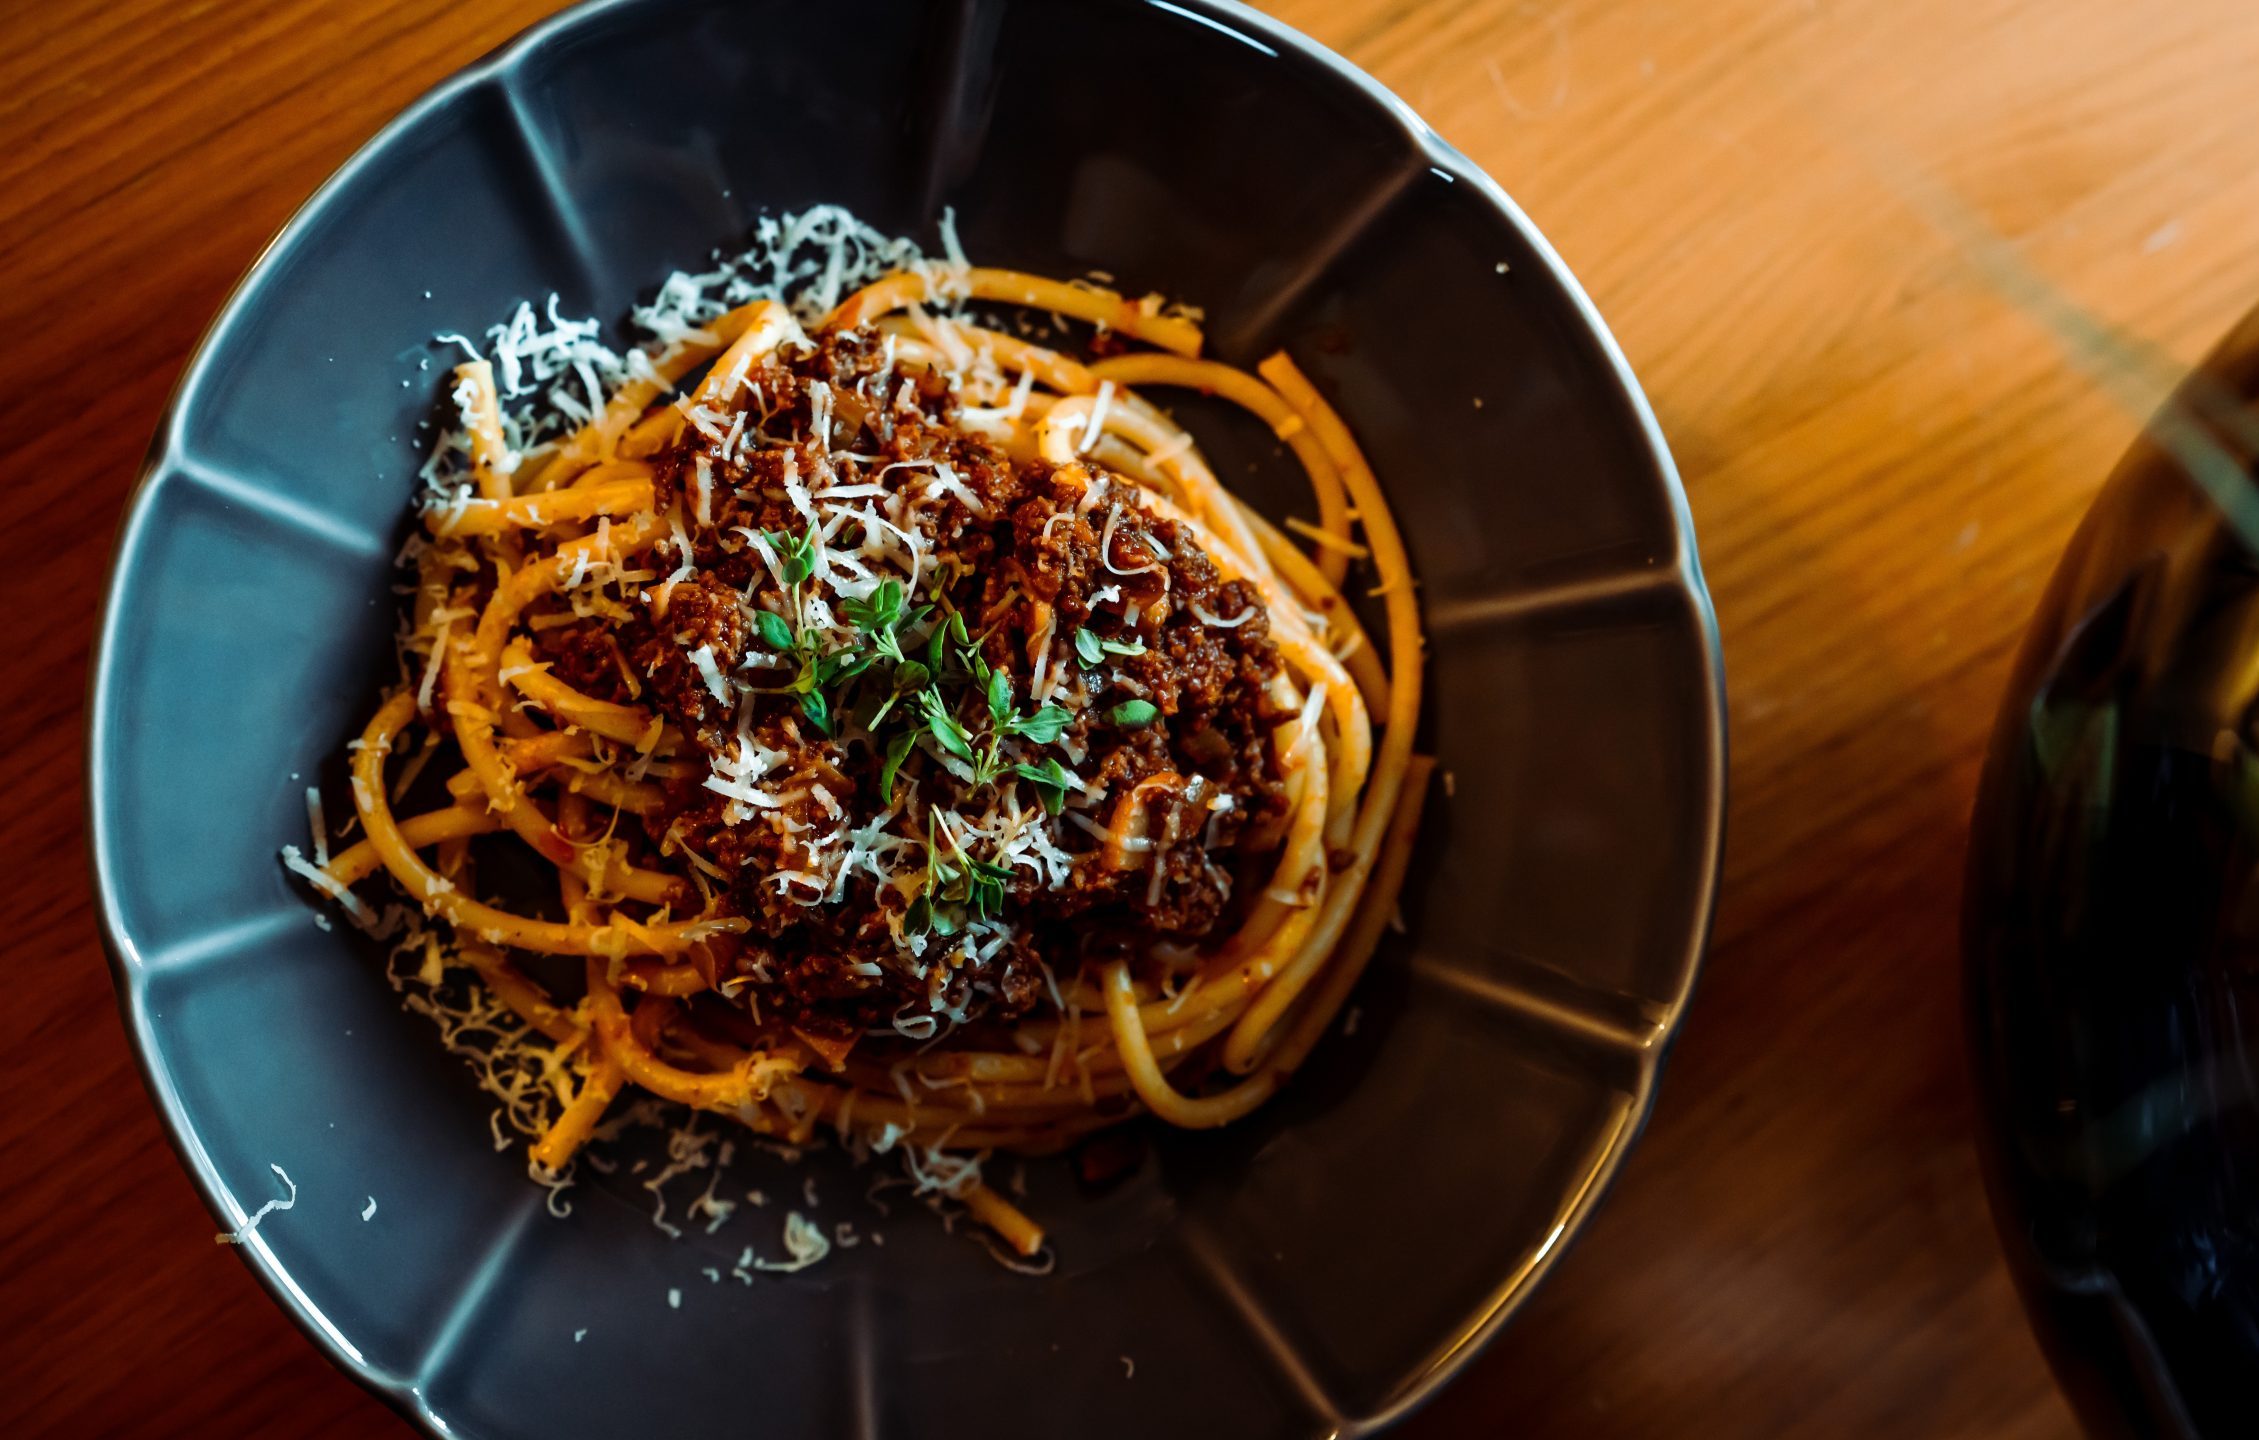 Pasta Bolognese for dinner, what else do you need?